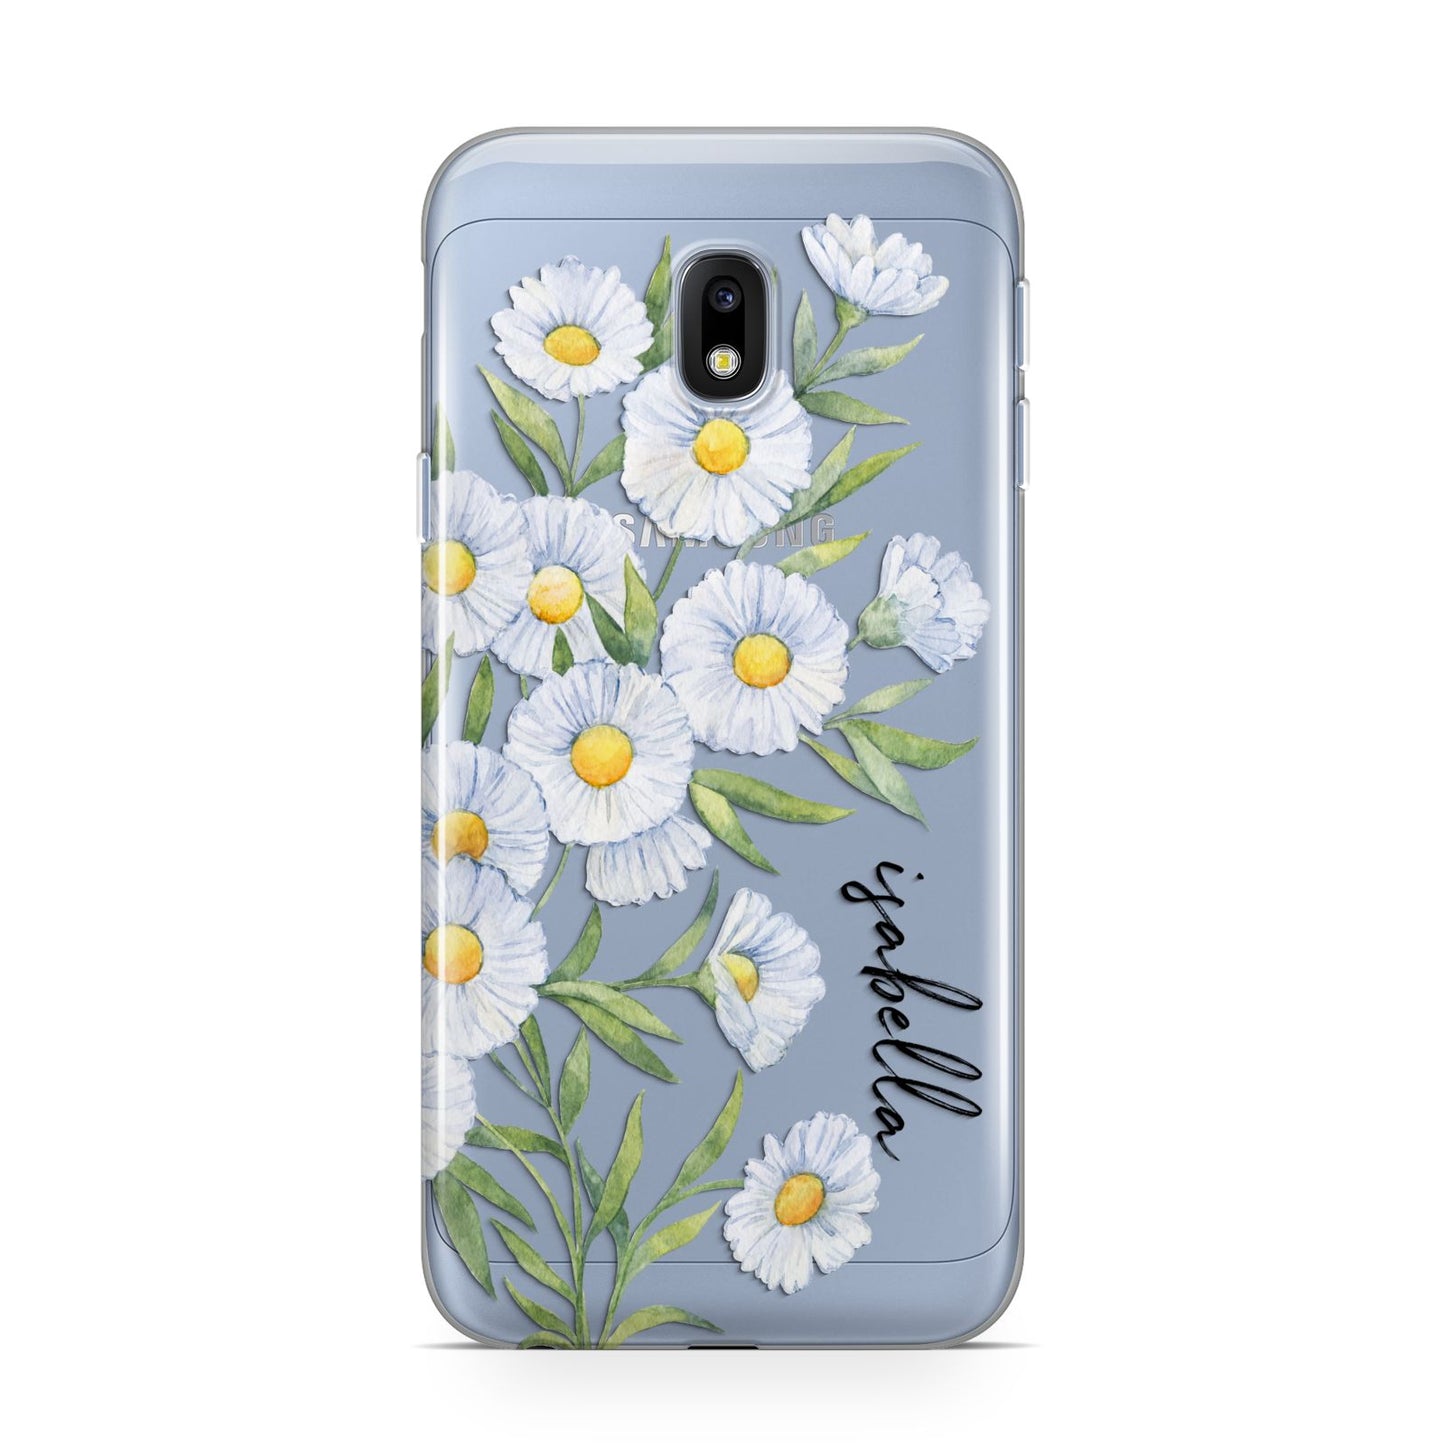 Personalised Daisy Flower Samsung Galaxy J3 2017 Case